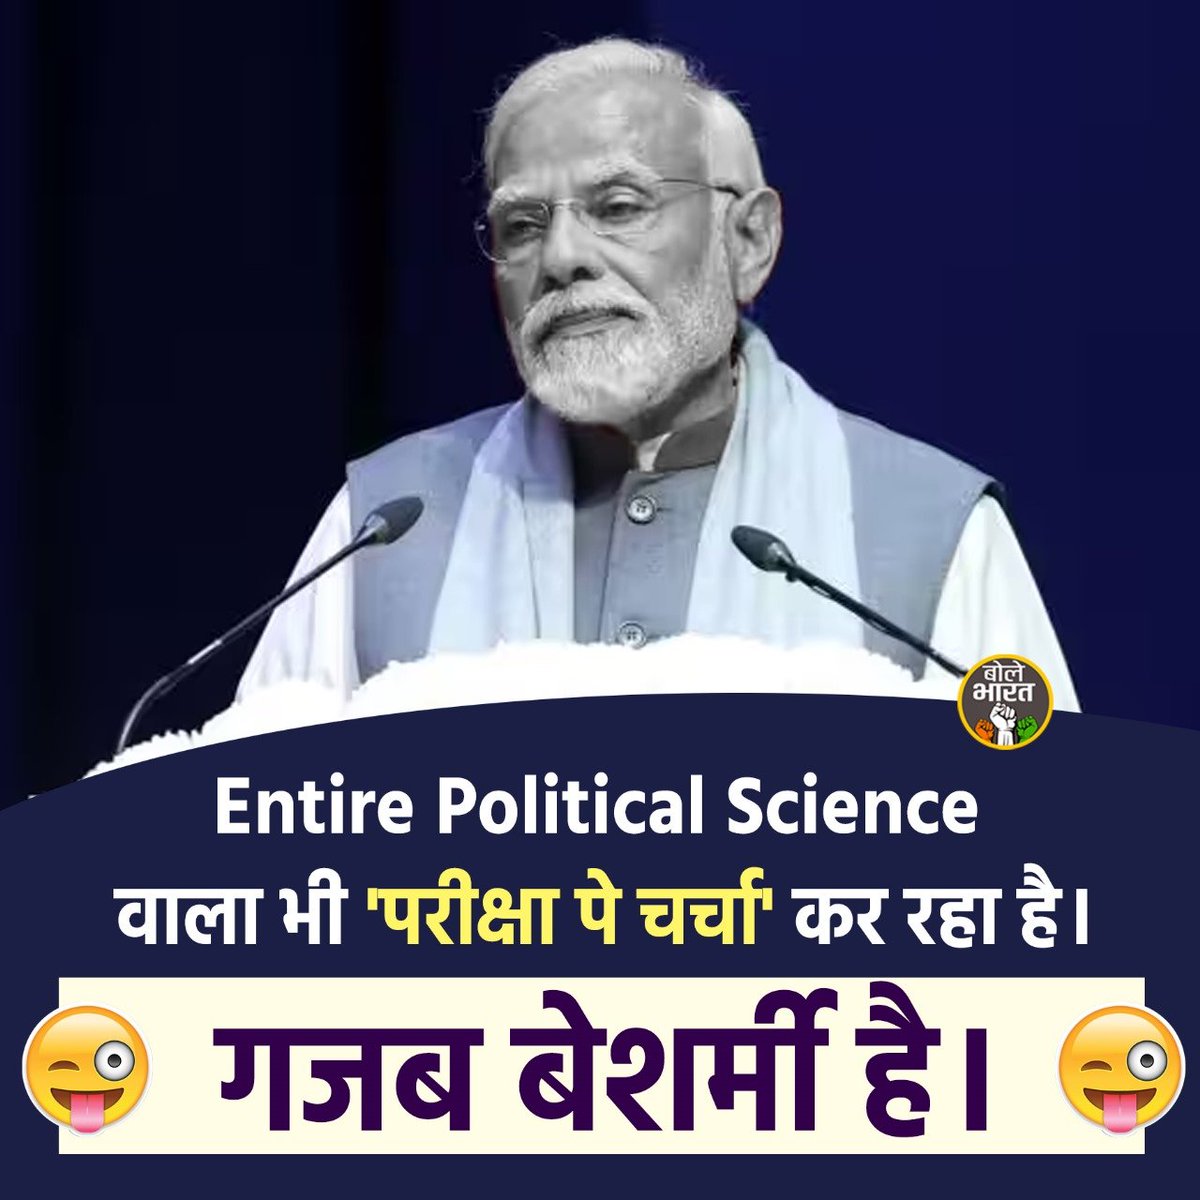 Entire Political Science
वाला भी 'परीक्षा पे चर्चा' कर रहा है !

😂😂😂😂

#BJP #Jumla #Hate #Godi #Media #Press #India #Poverty #NitishKumar #AskKichcha